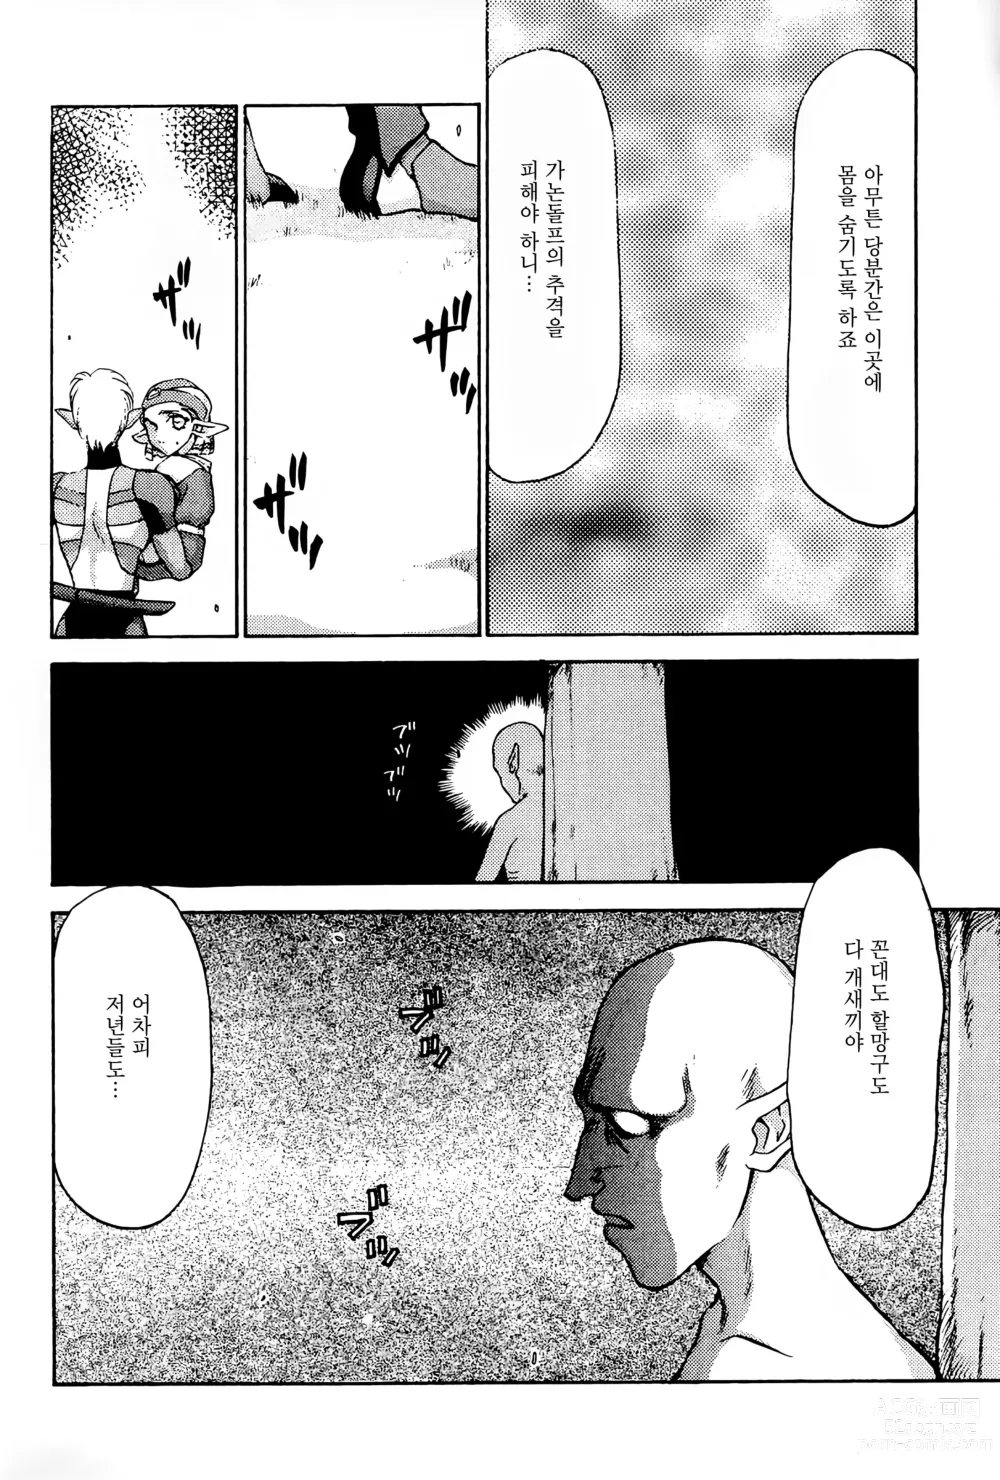 Page 7 of doujinshi NISE Zelda no Densetsu Prologue